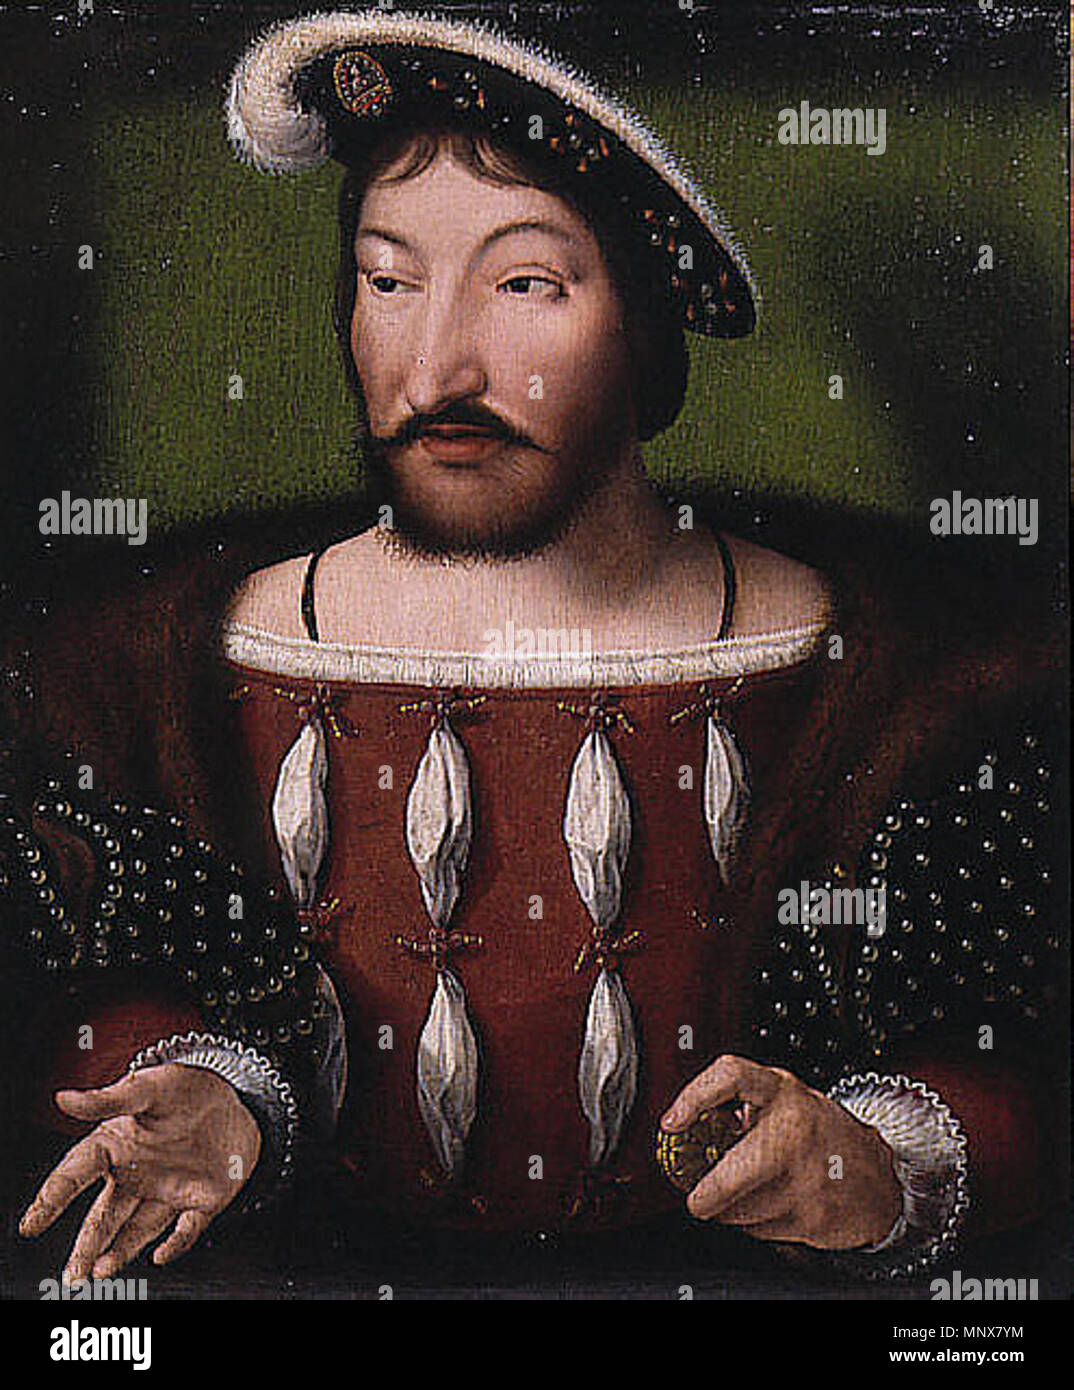 https://c8.alamy.com/comp/MNX7YM/king-francis-i-of-france-circa-1538-1020-portrait-of-king-francis-i-of-france-MNX7YM.jpg